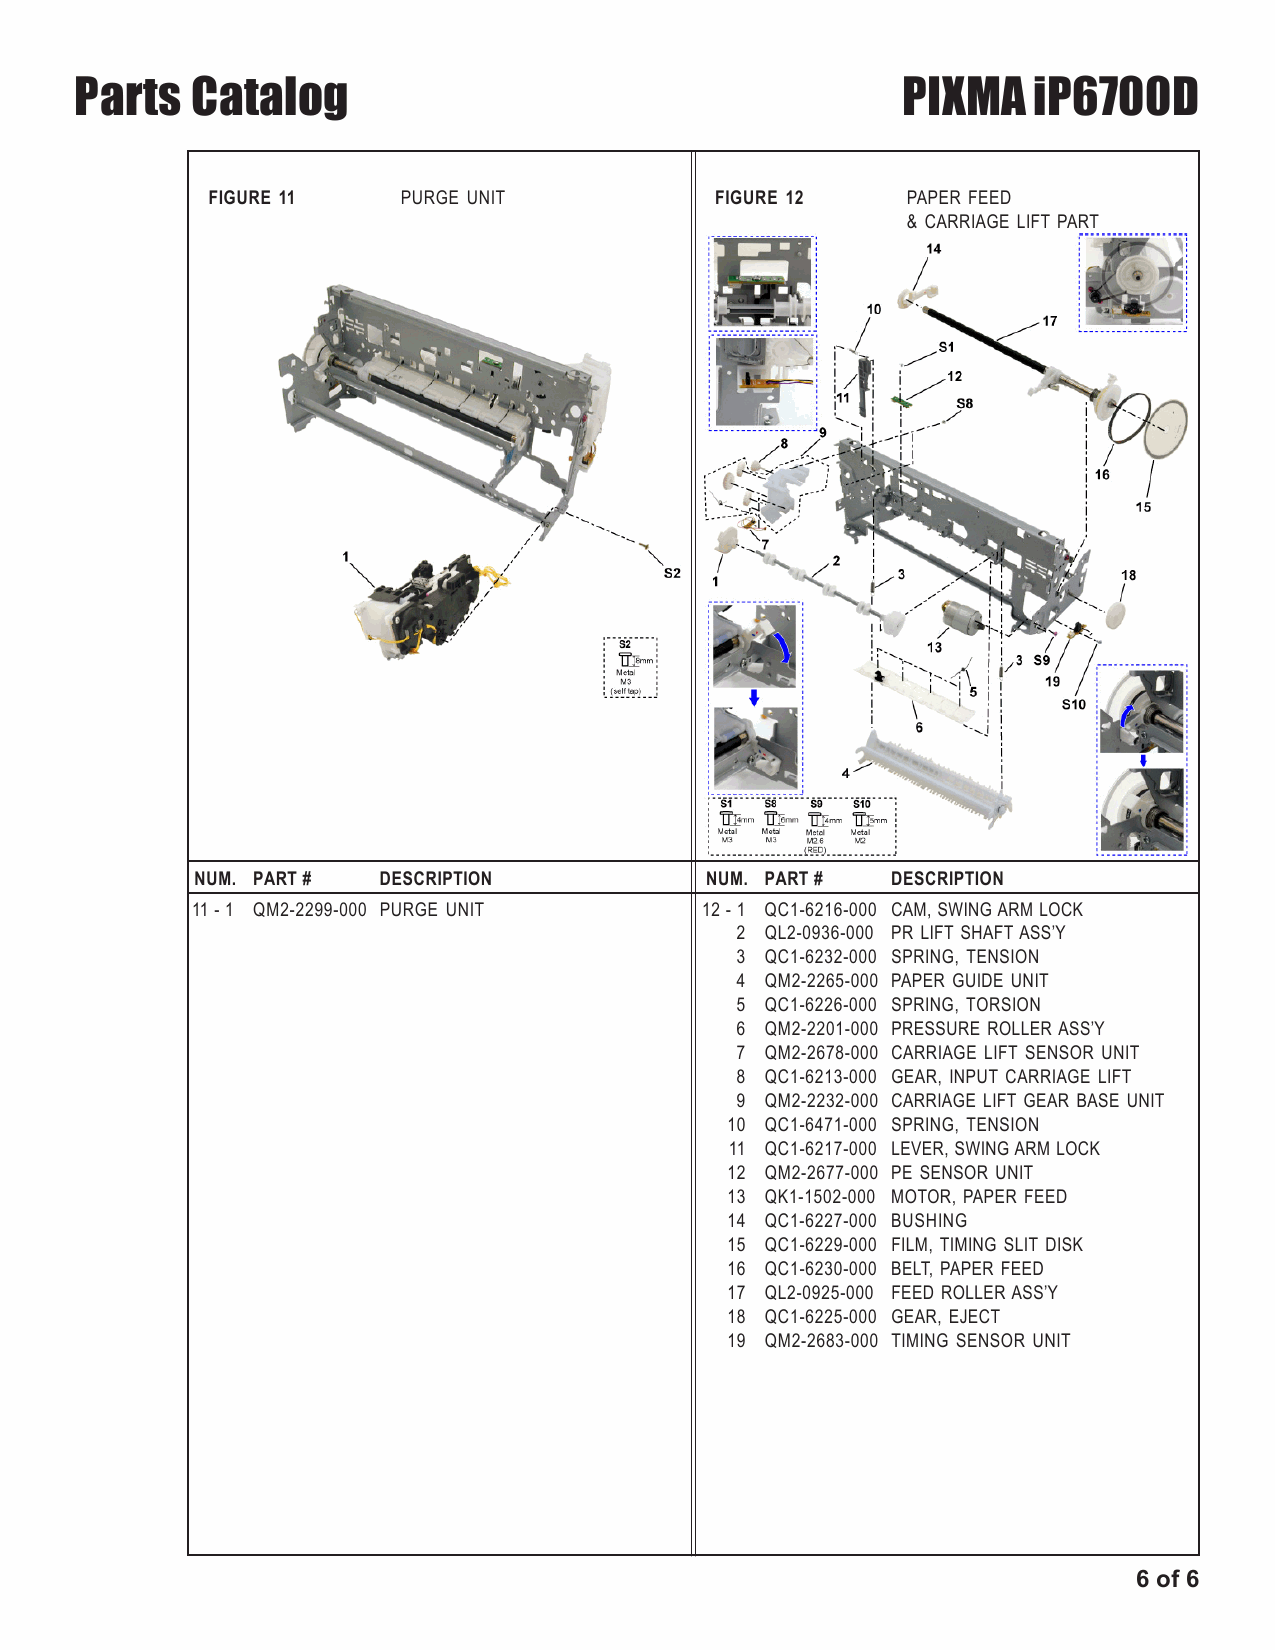 Canon PIXMA iP6700D Parts and Service Manual-6